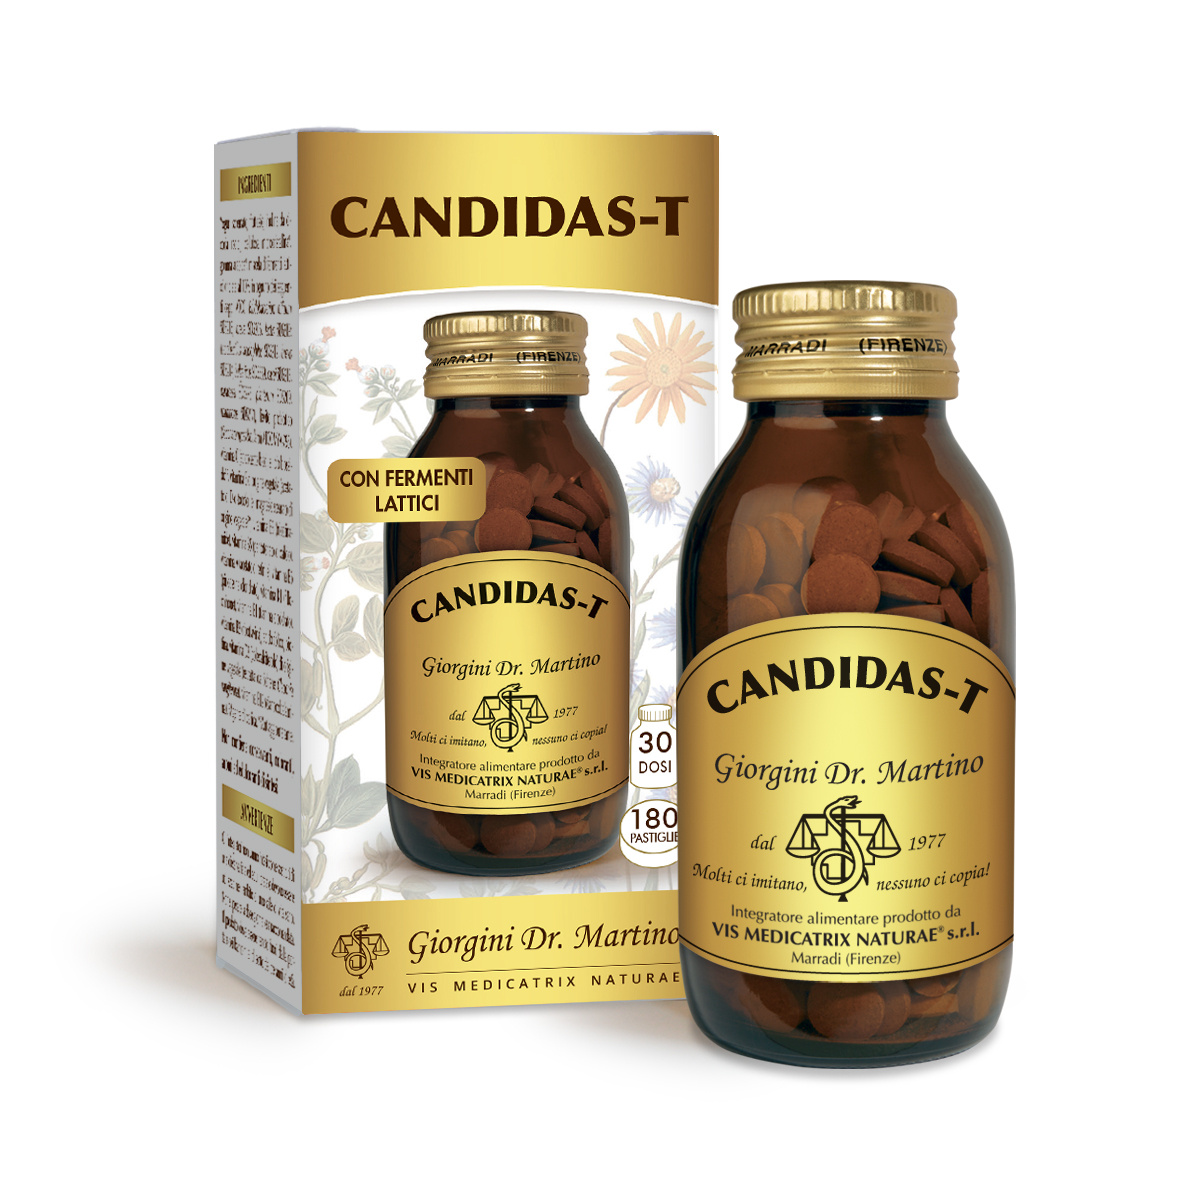 CANDIDAS-T 90g - 180 pastiglieda 500 mg